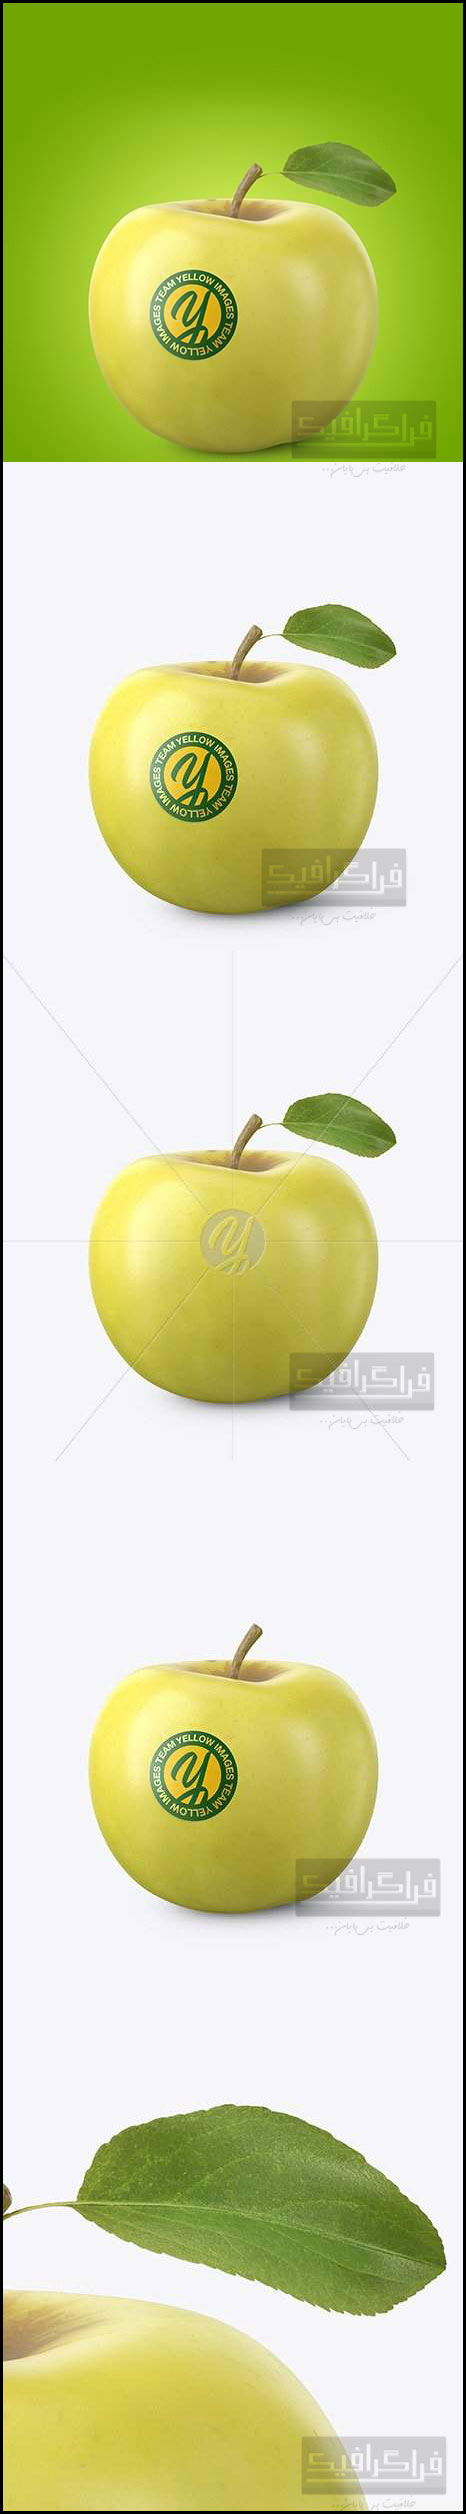 دانلود ماک آپ فتوشاپ میوه سیب